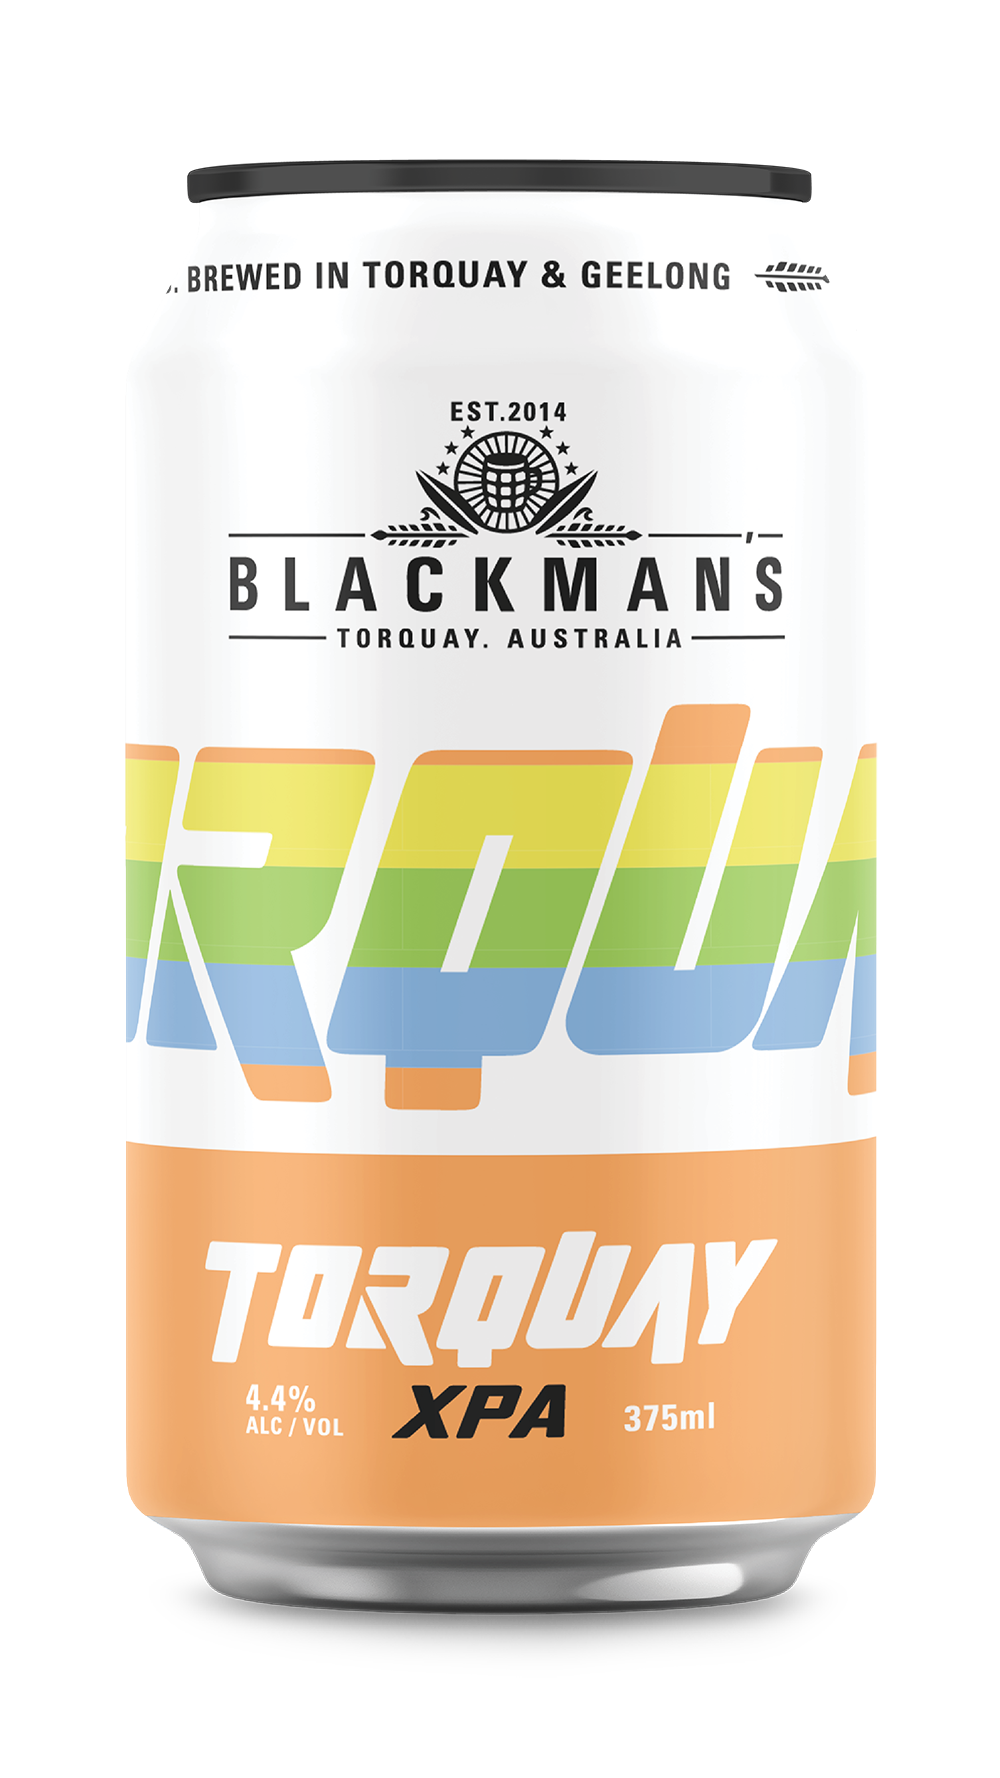 Blackman's Brewery - Torquay XPA